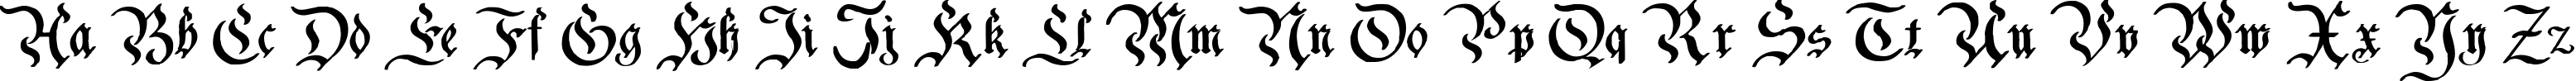 Пример написания английского алфавита шрифтом Charterwell Bold